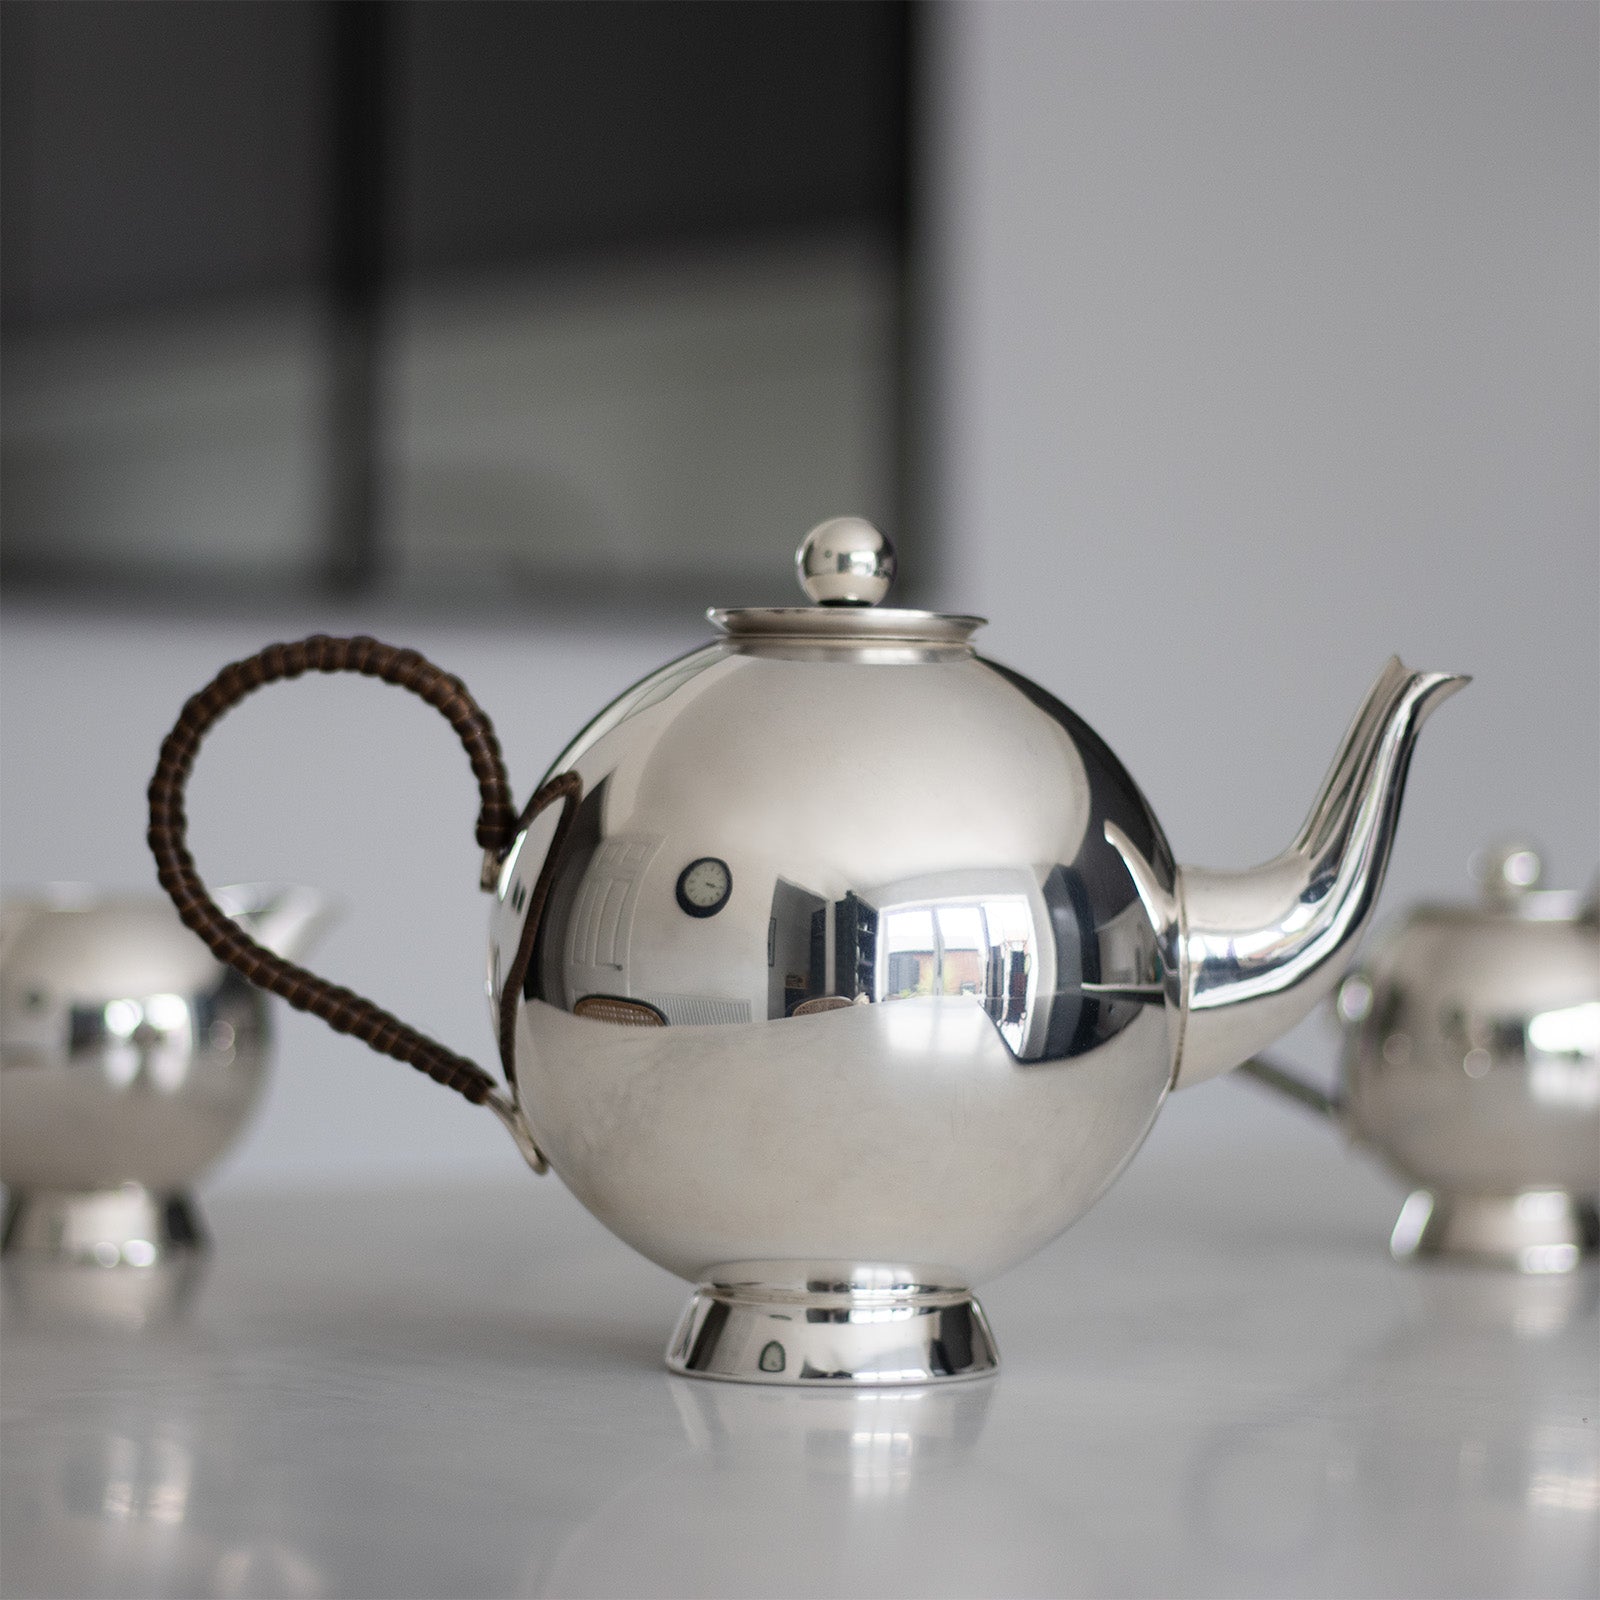 Silver Plated Spheres Tea Infuser Large Wicker Handle